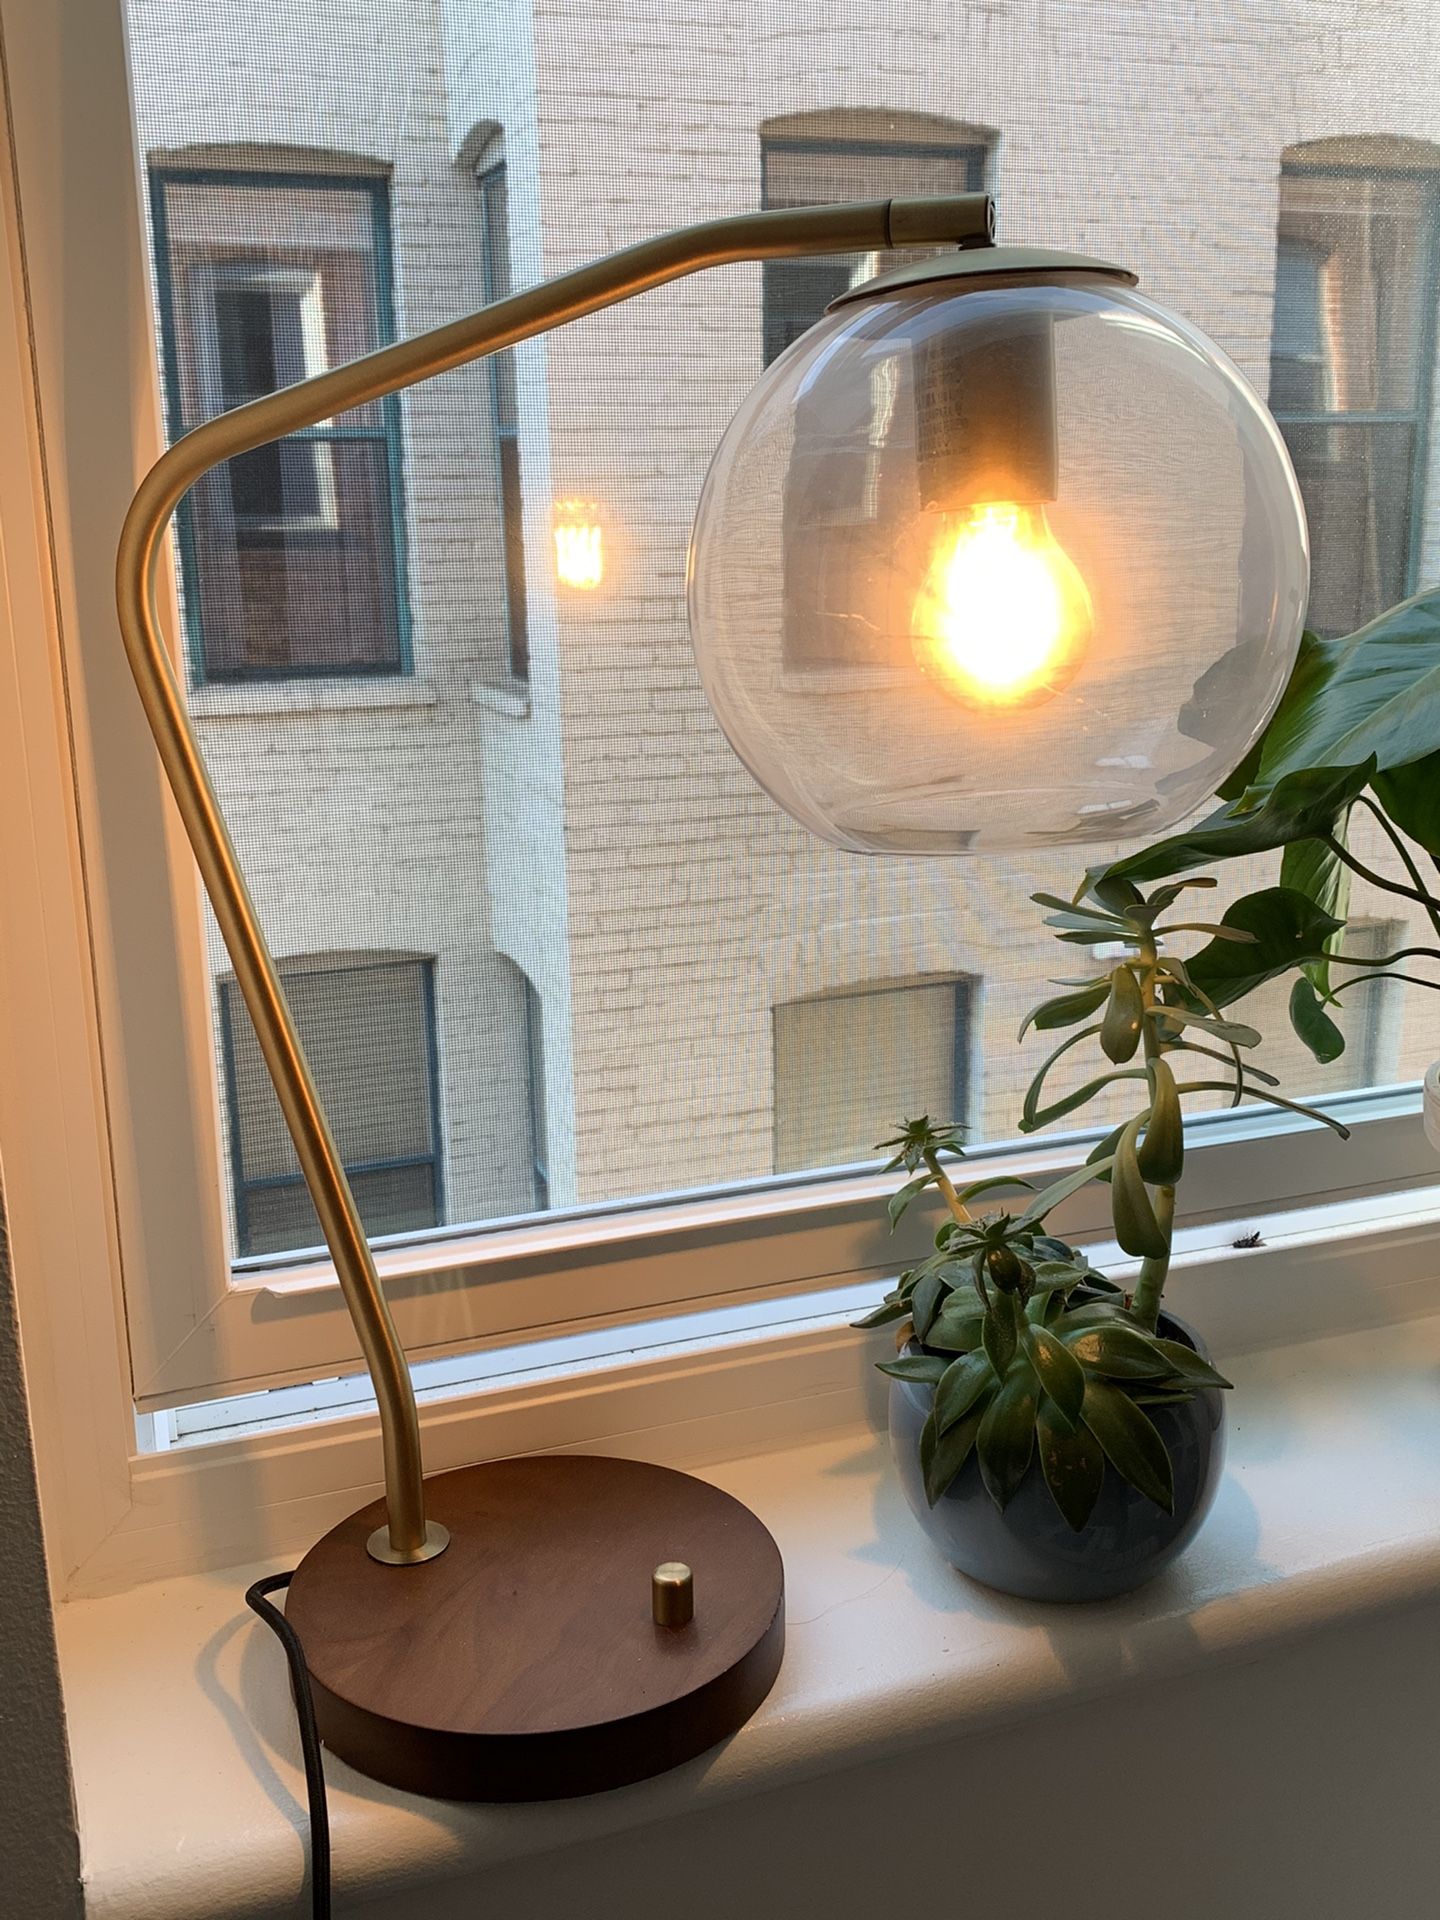 Cute desk lamp almost new